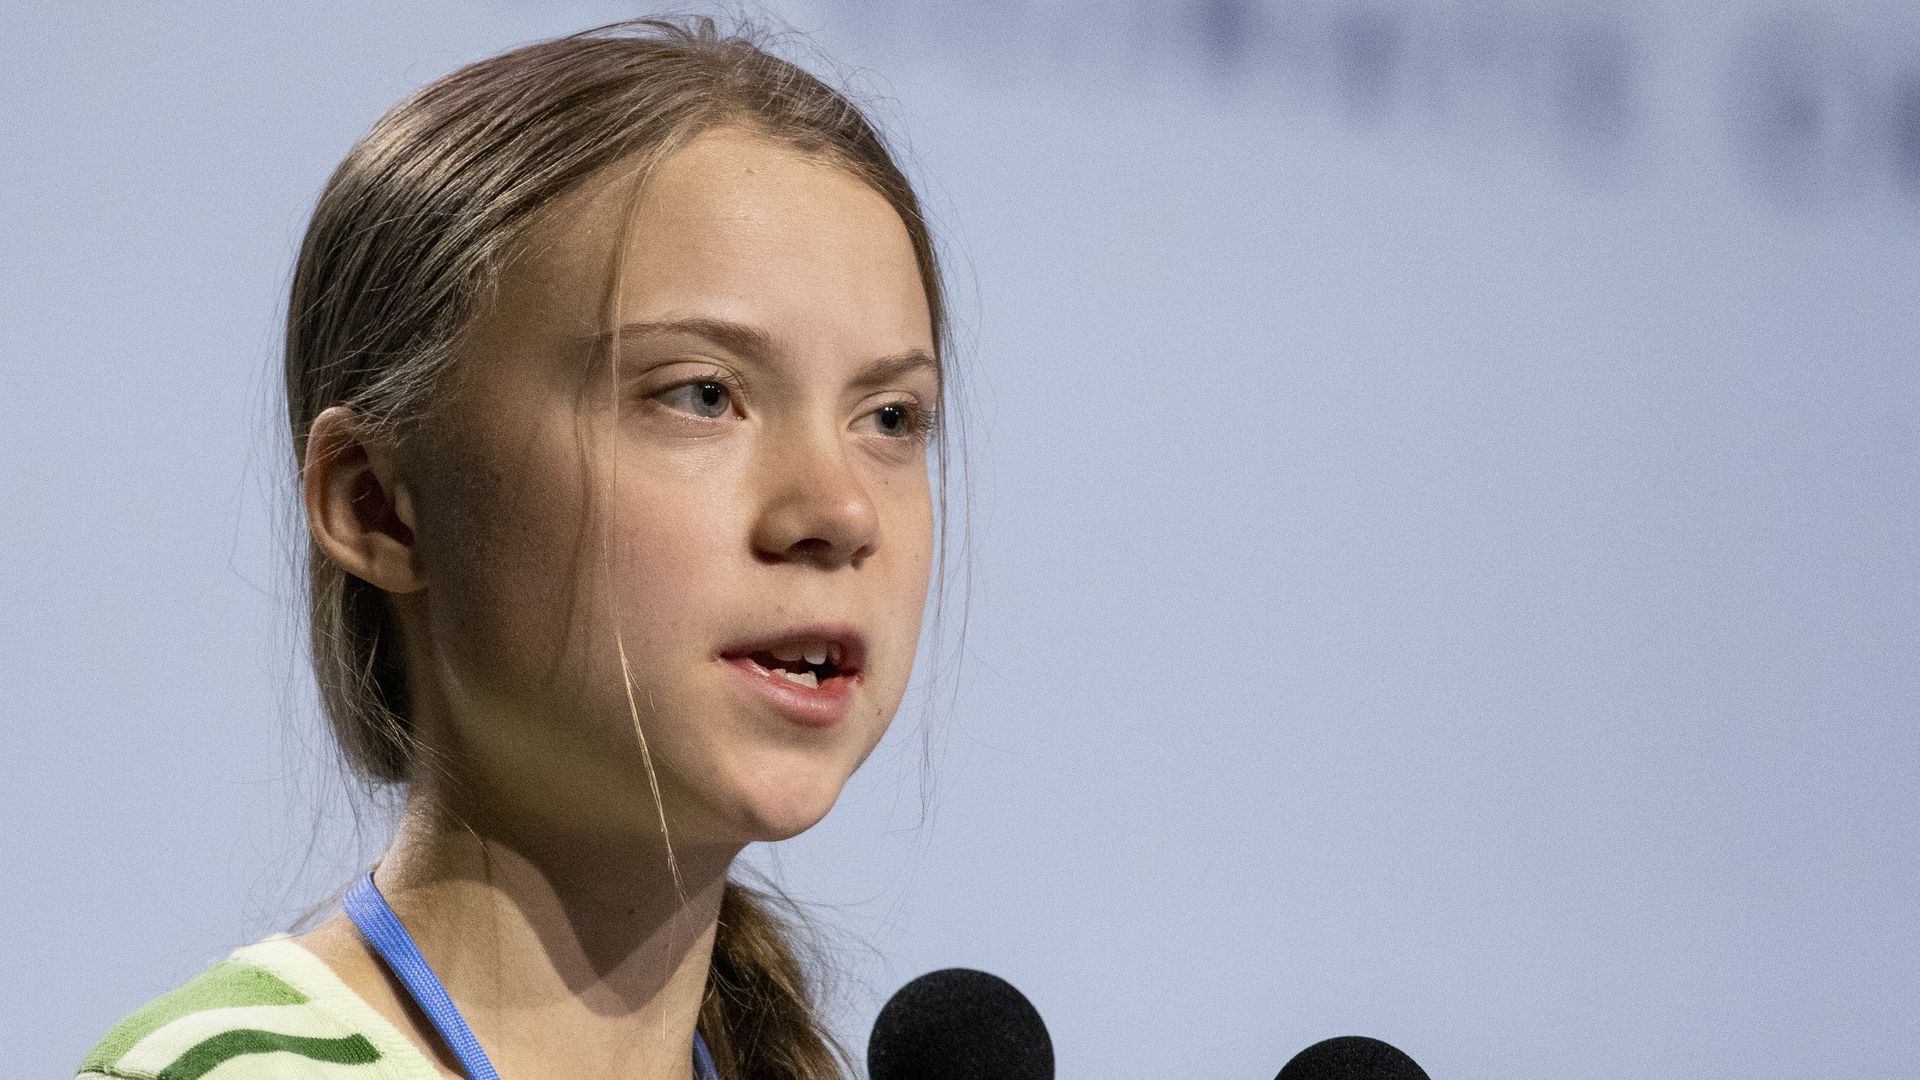 Swedish Climate Change activist Greta Thunberg